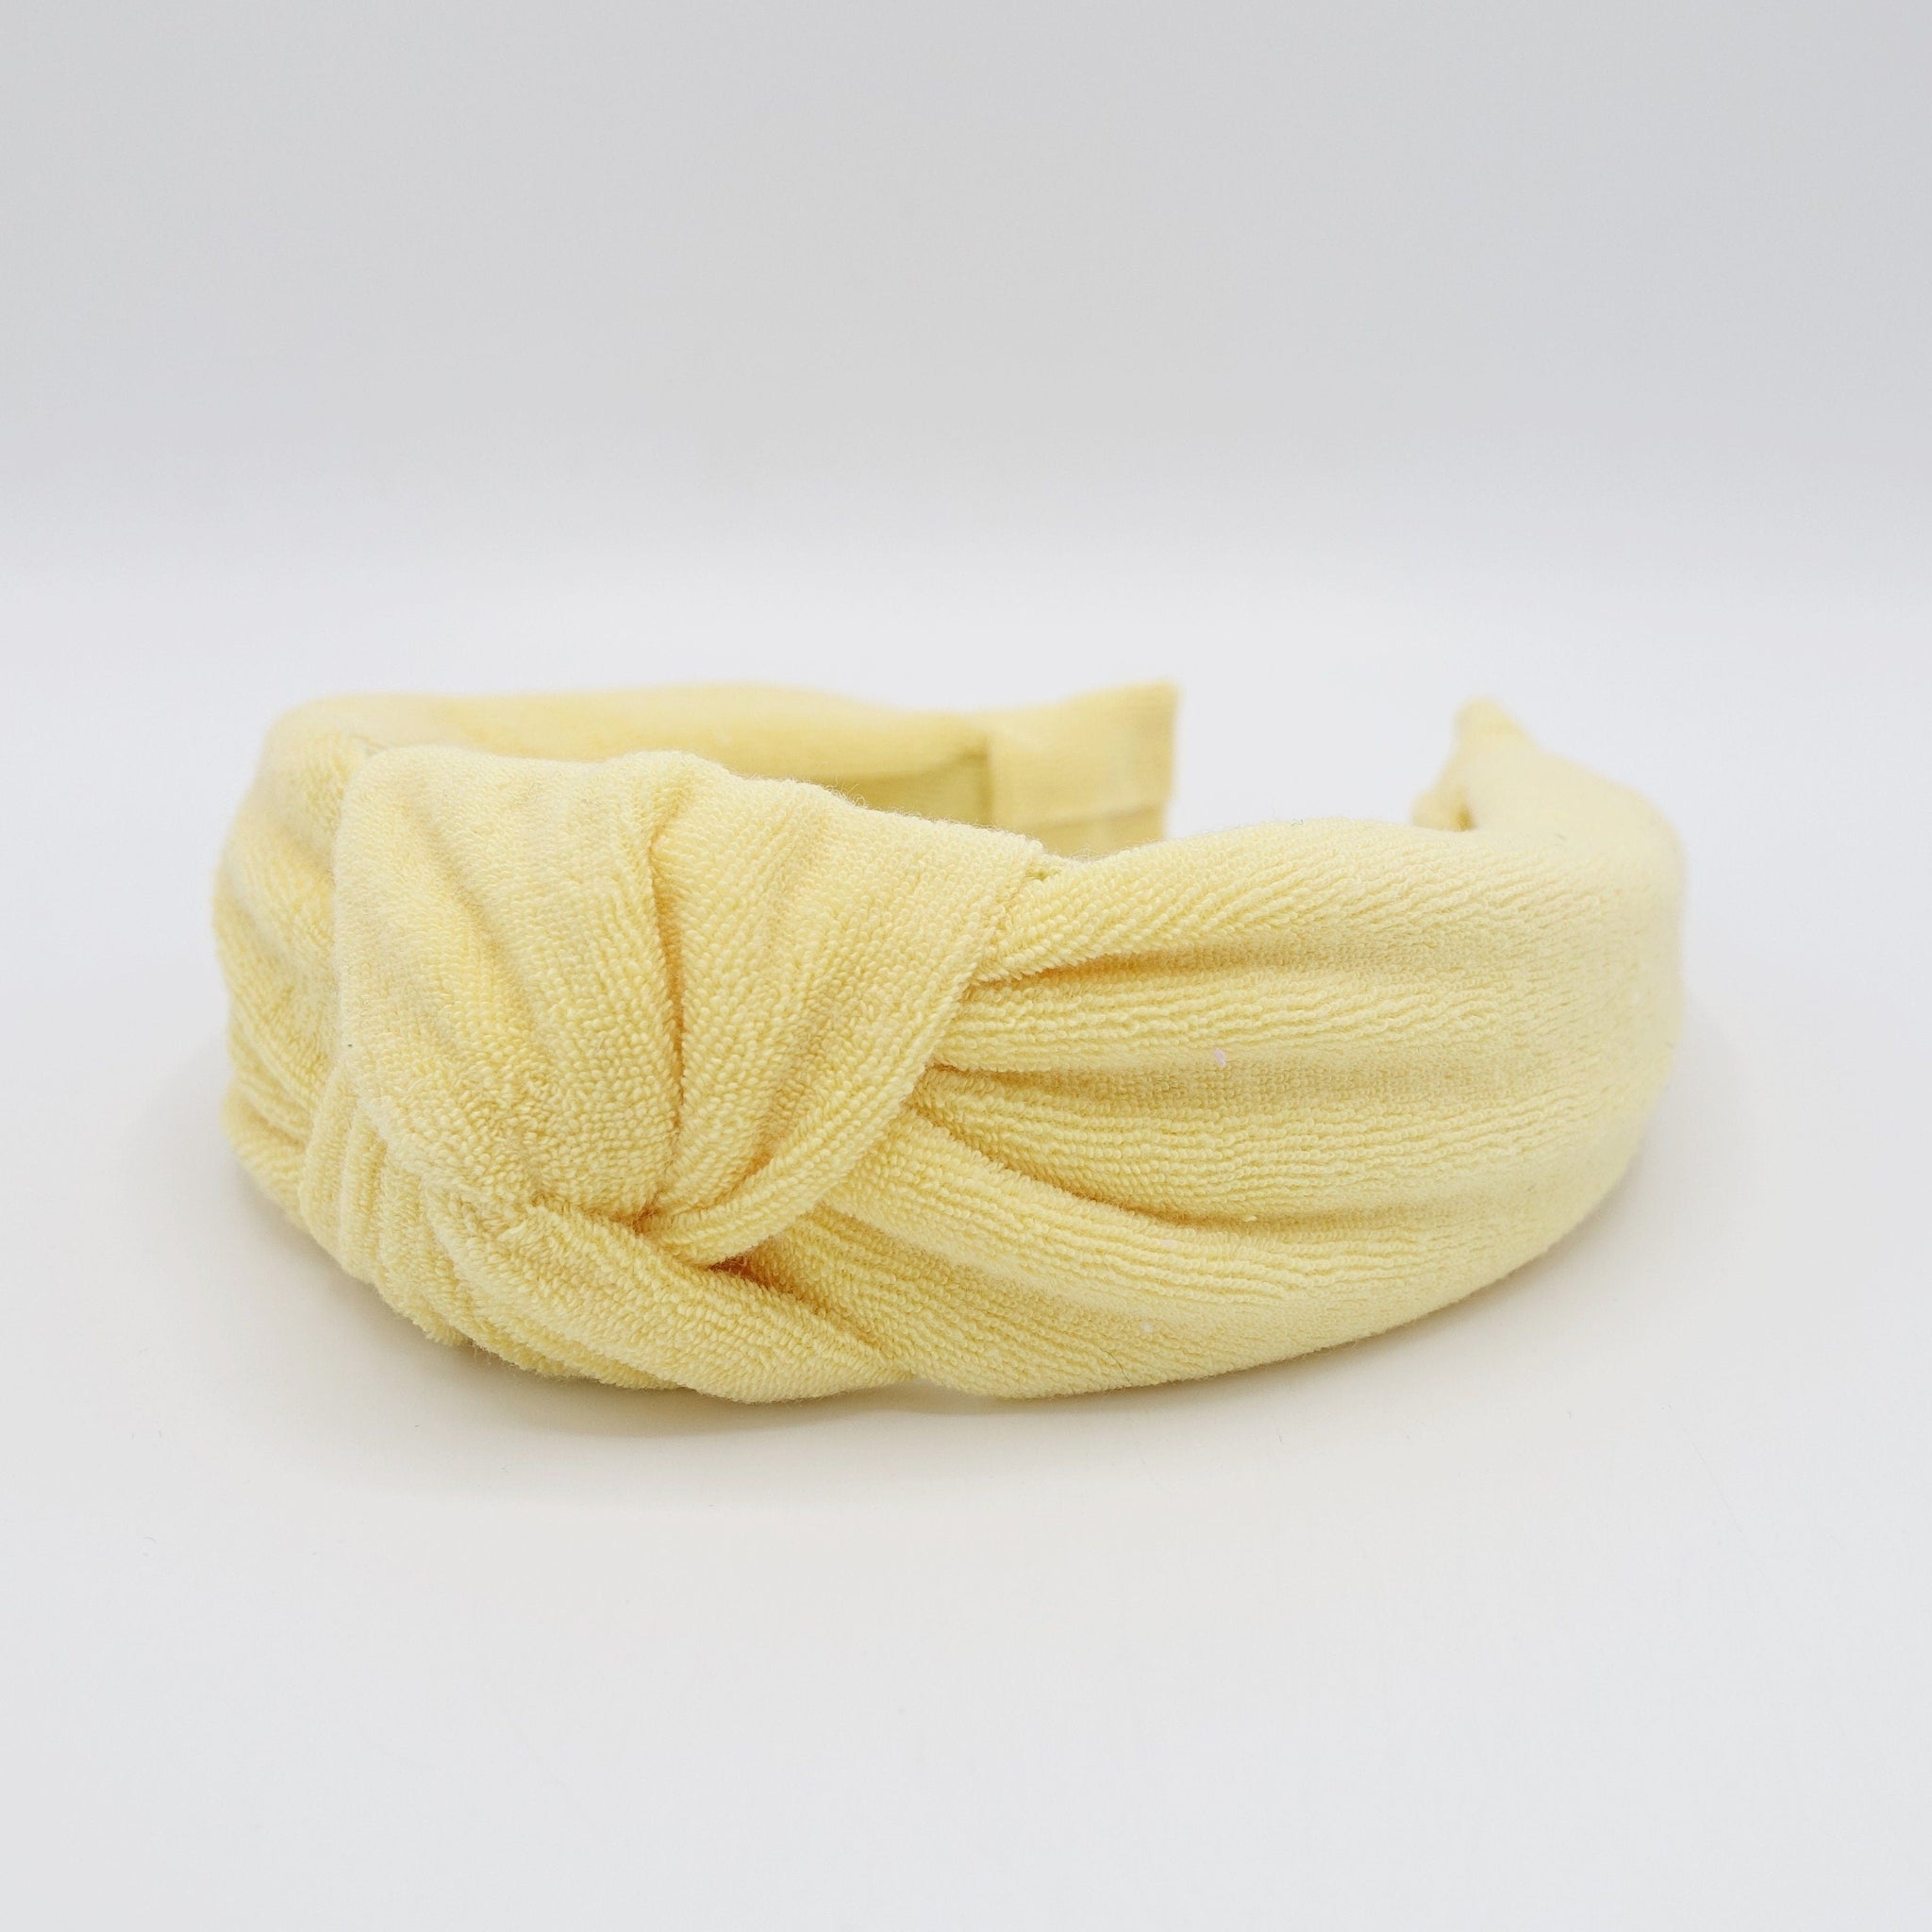 veryshine.com Headbands Yellow terry cloth top knot headband cozy fashion hairband for women